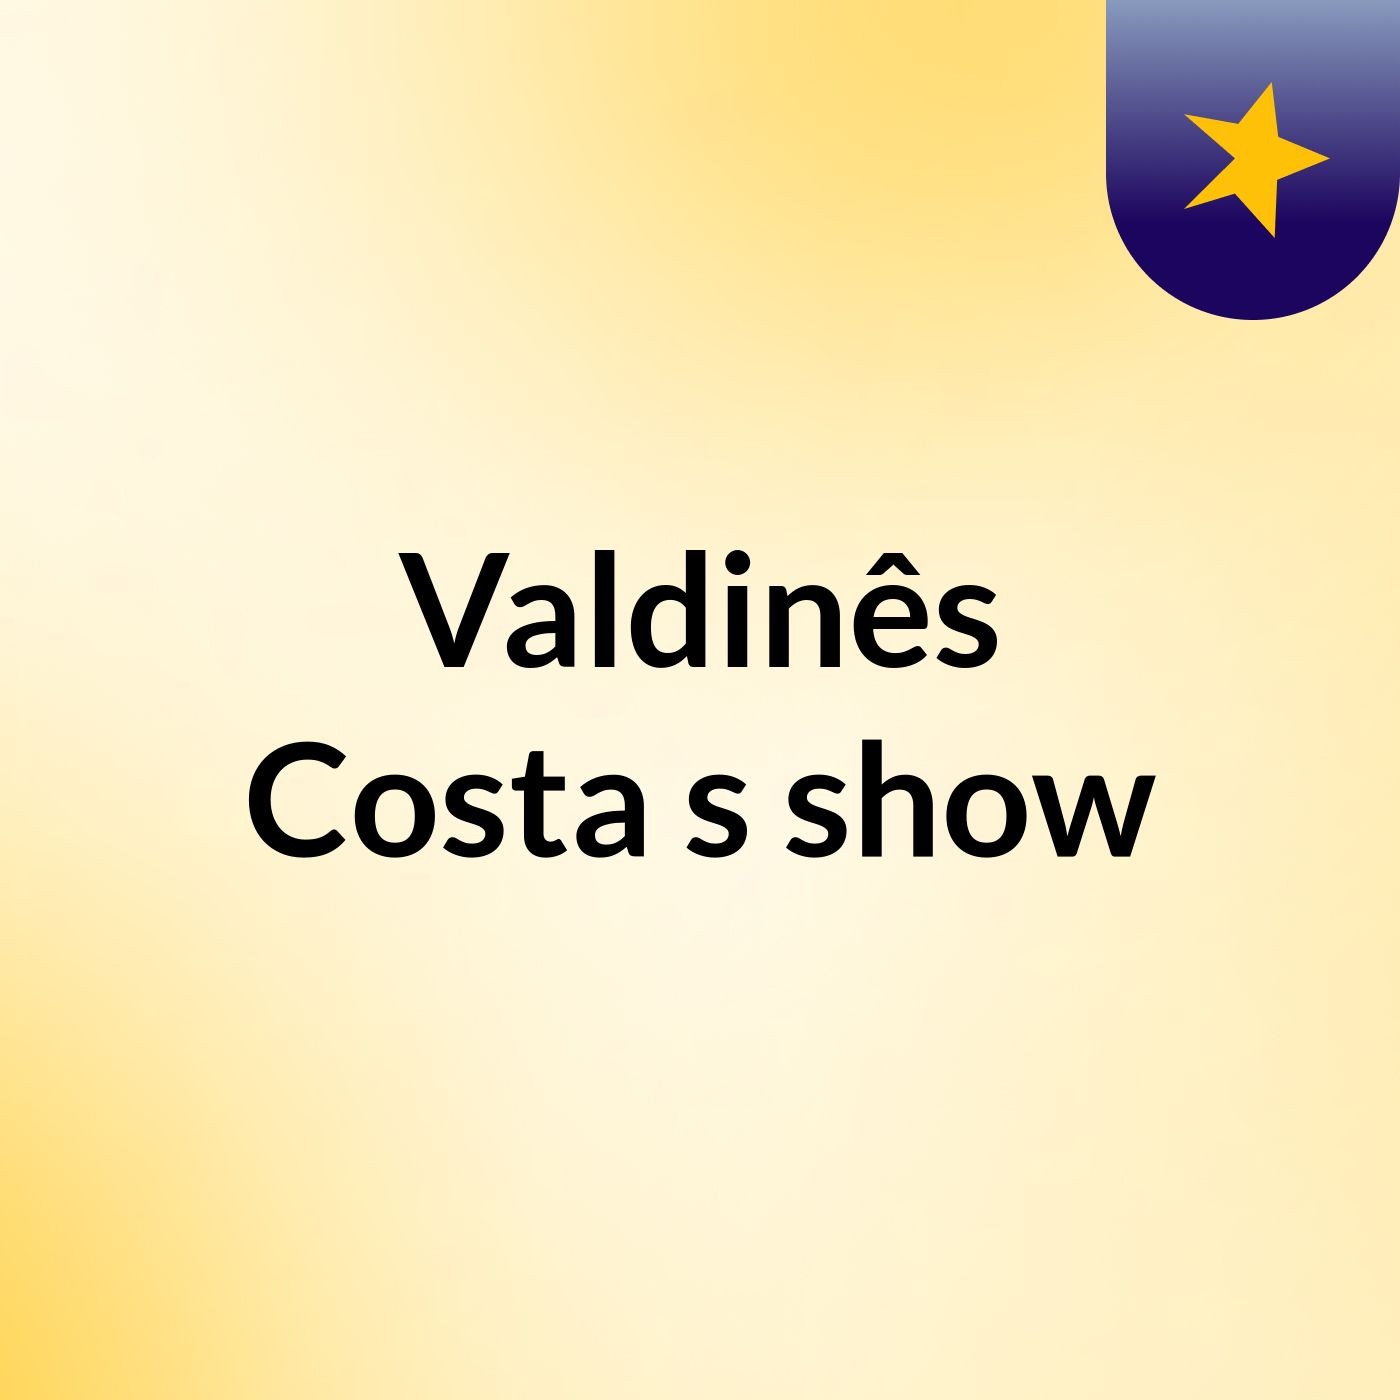 Valdinês Costa's show